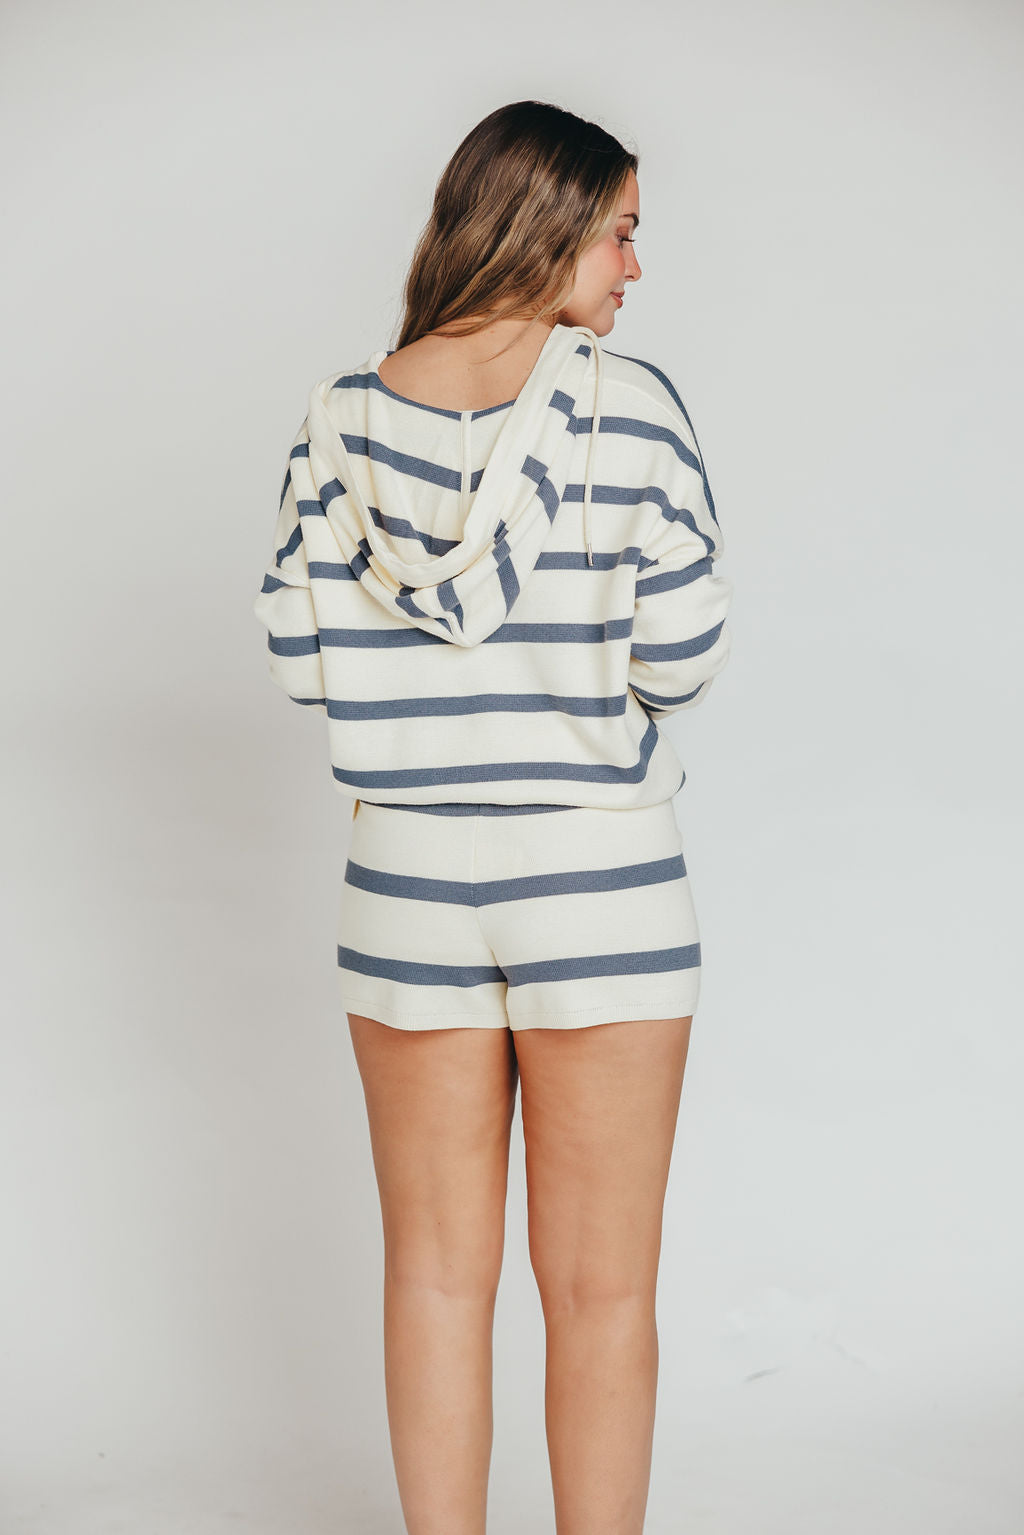 Brighton Pullover Top in White and Slate Blue Stripe